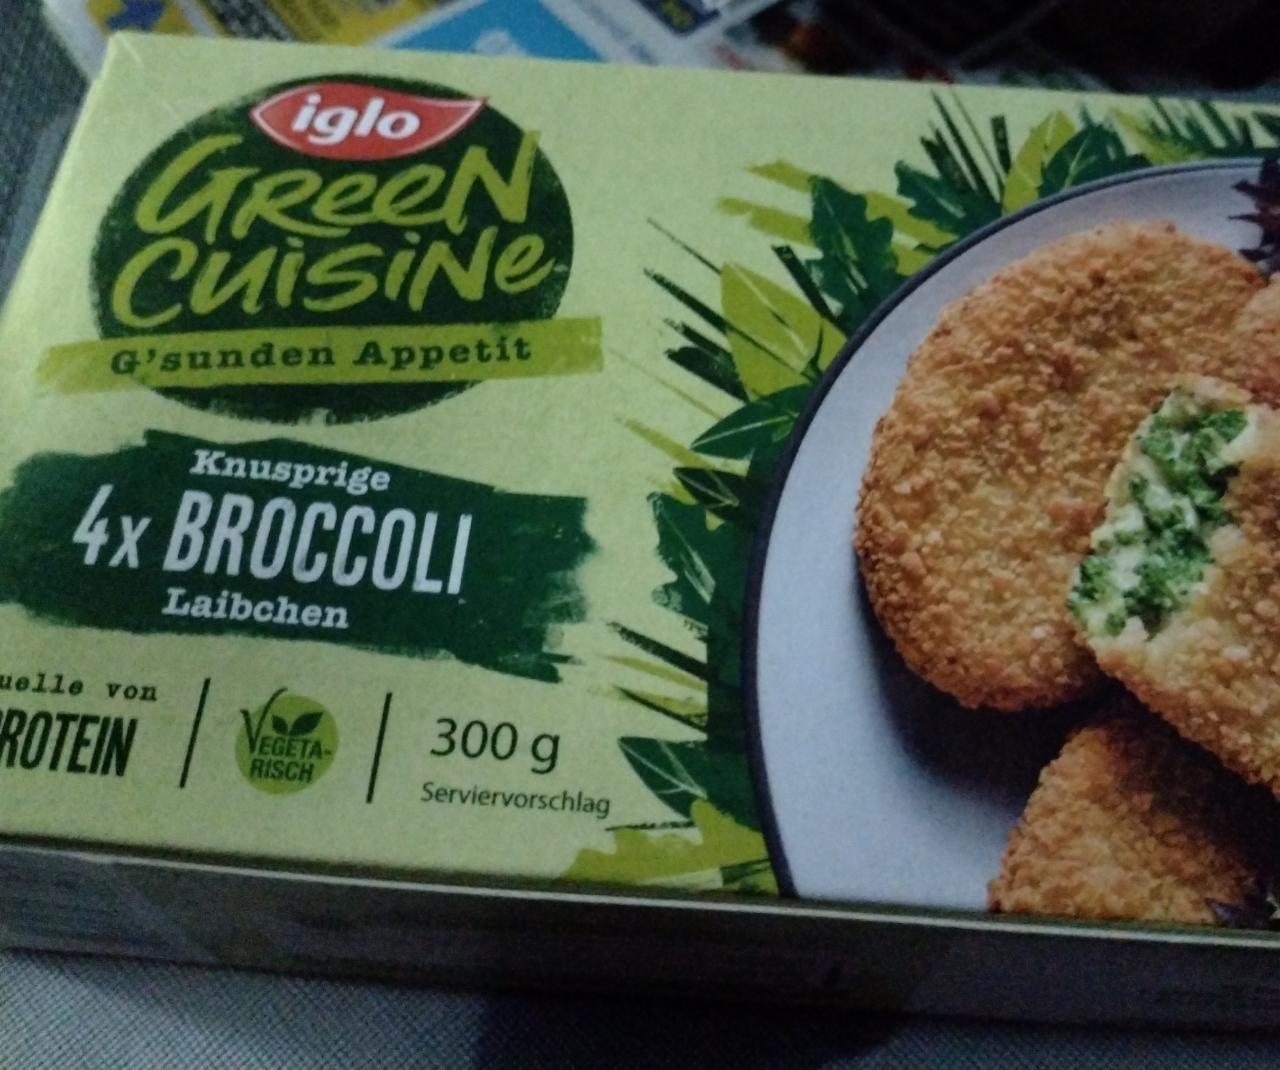 Fotografie - Knusprige 4x Broccoli Laibchen Iglo Green Cuisine